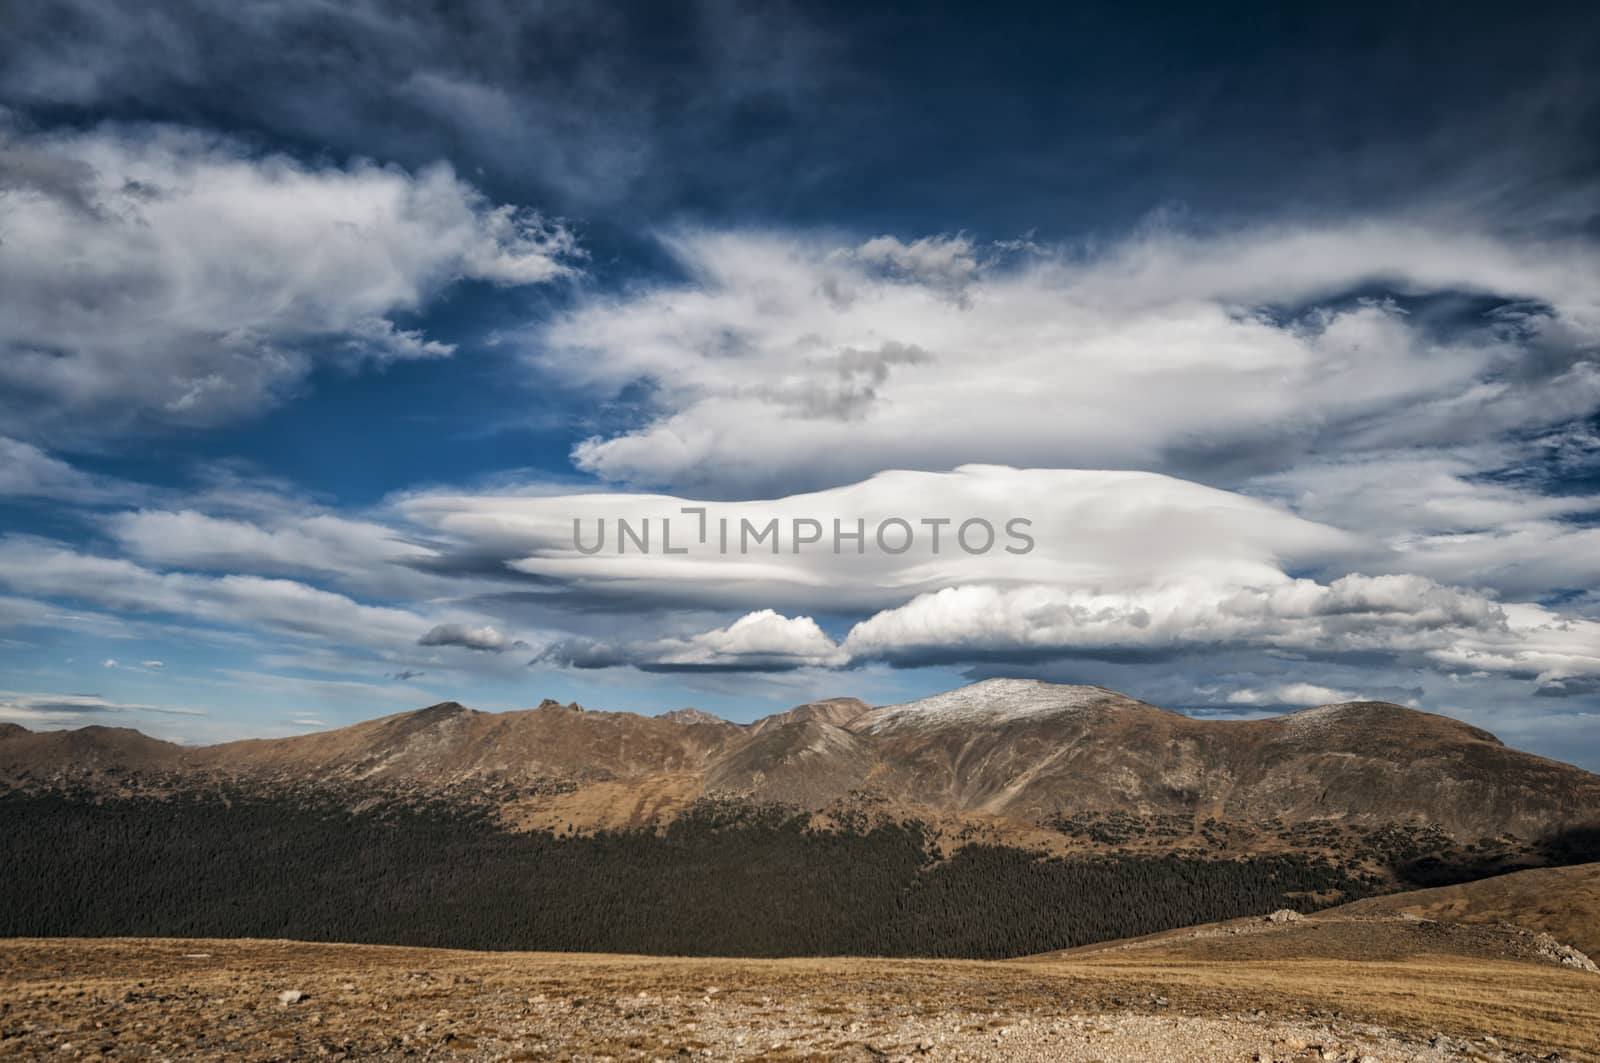 Rocky Mountains National Park Landscape, Colorado, USA